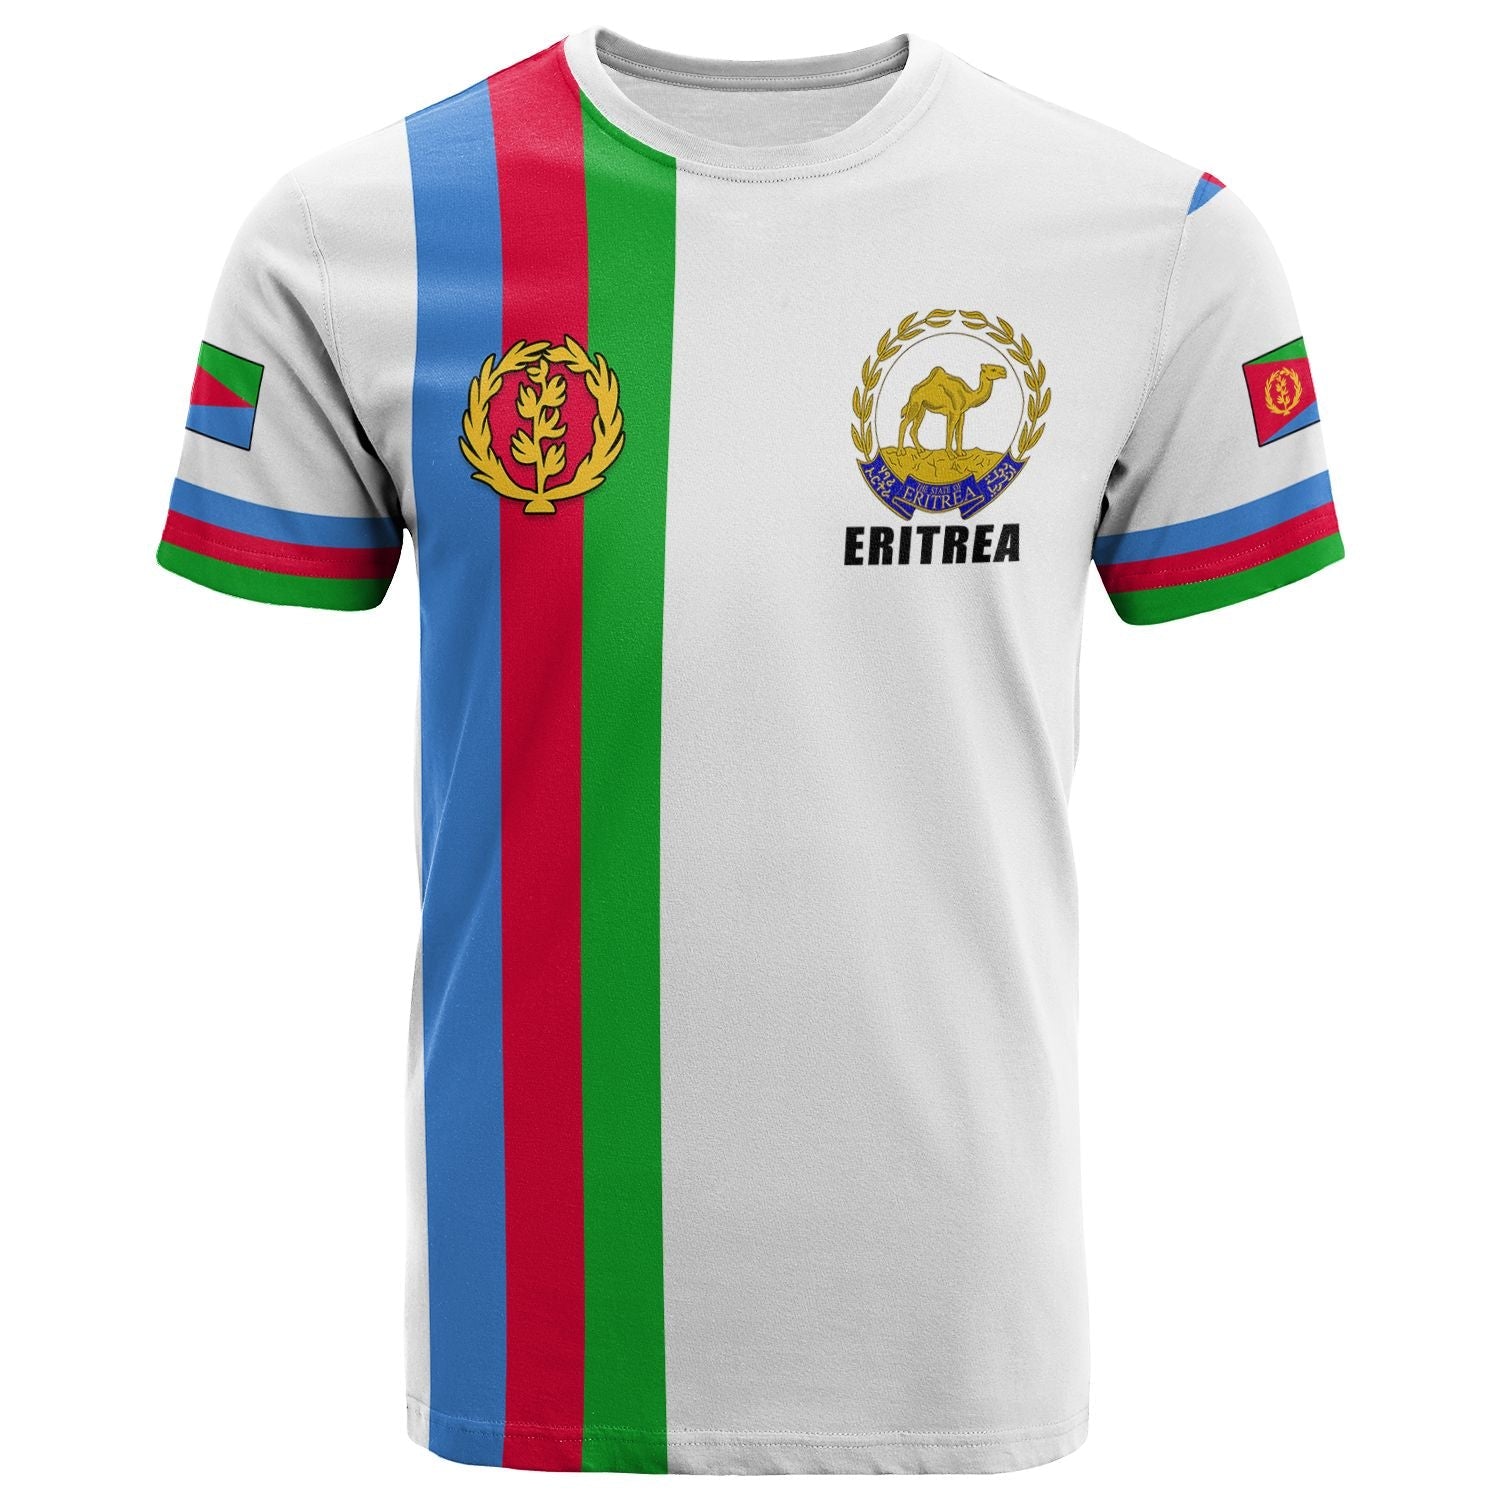 eritrea-t-shirt-striped